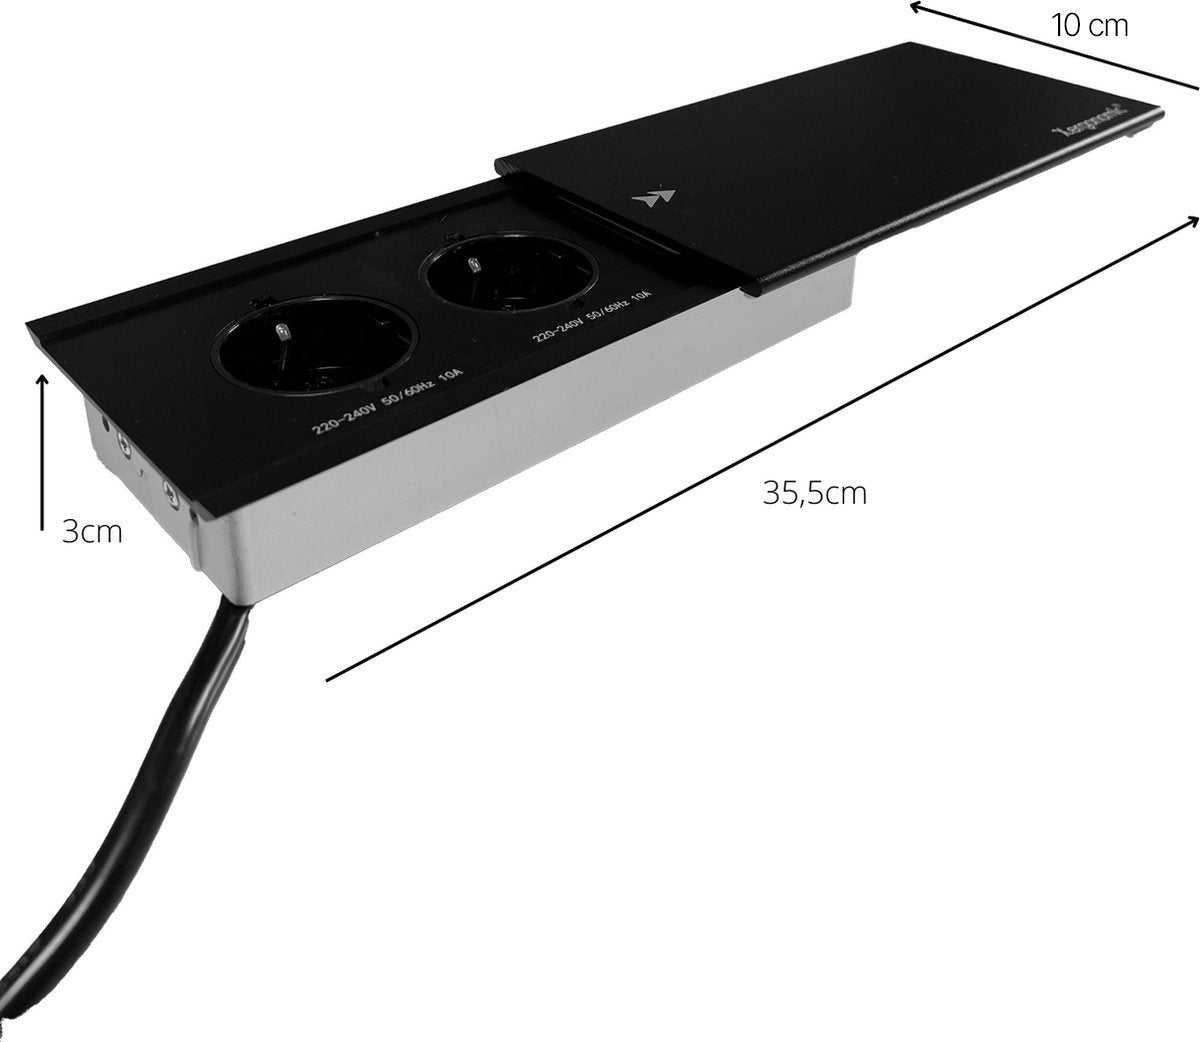 Xergonomic Desk socket sliding cover with 2 sockets and 2 USB ports Black